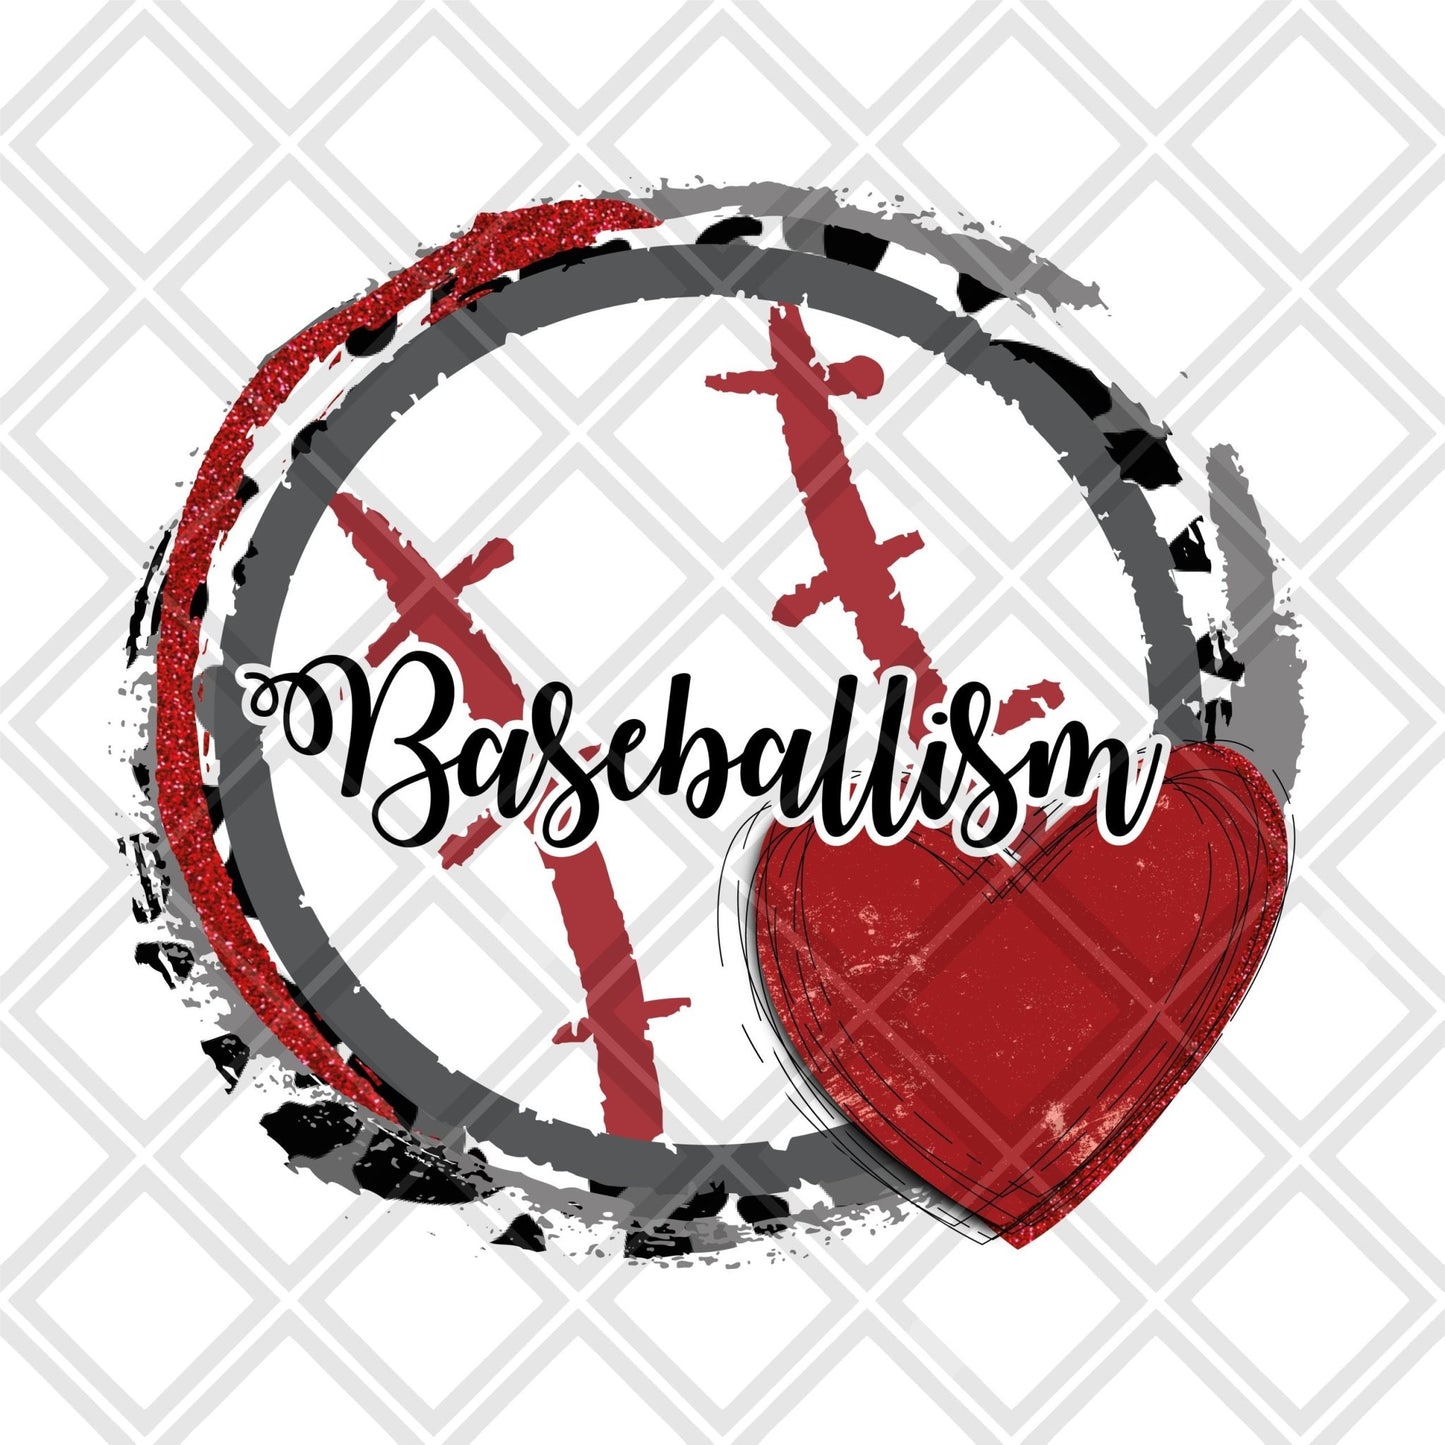 baseballism png Digital Download Instand Download - Do it yourself Transfers